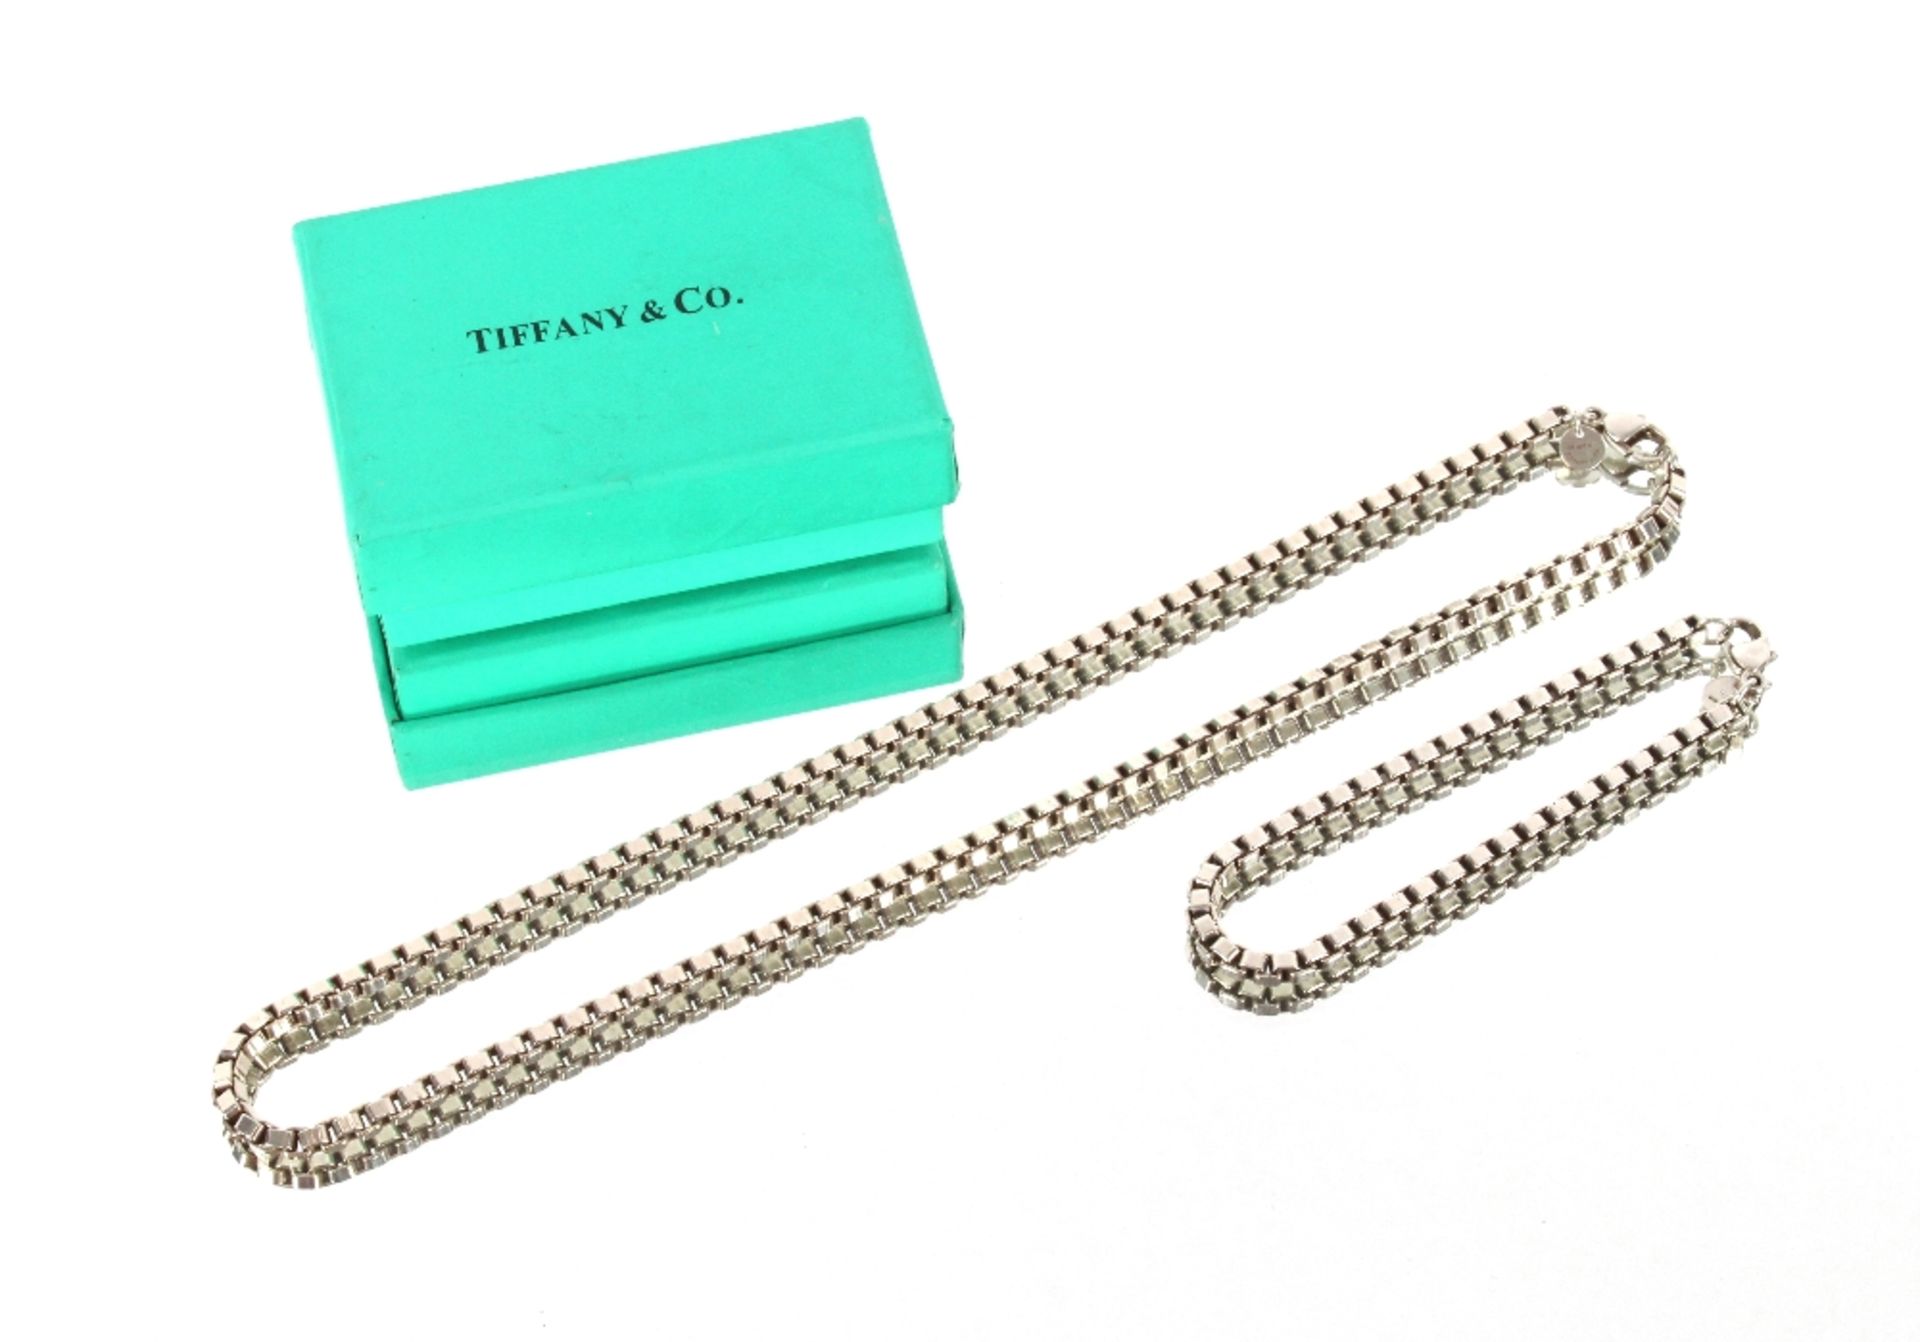 A Tiffany Venetian silver chain and bracelet, hallmarked